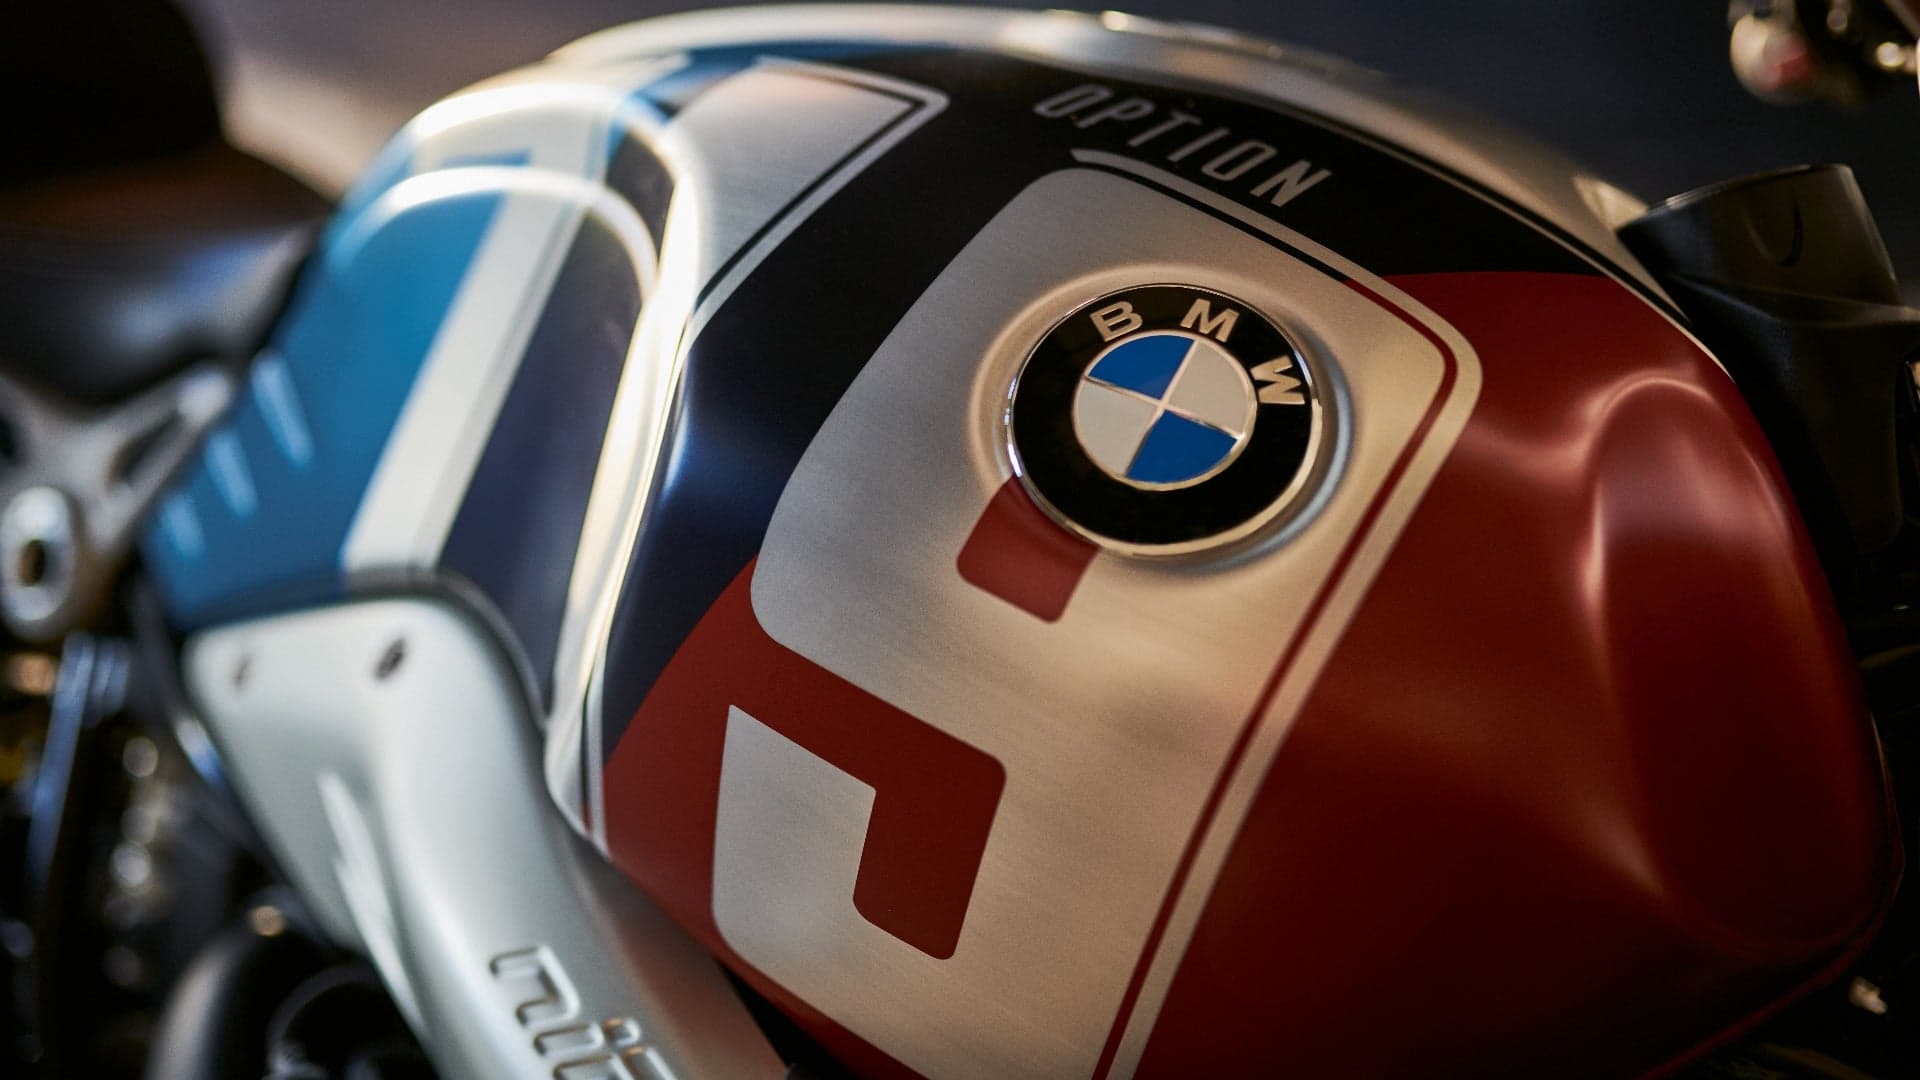 Stunning ‘Option 719’ Paint Schemes Added to BMW R nineT Line